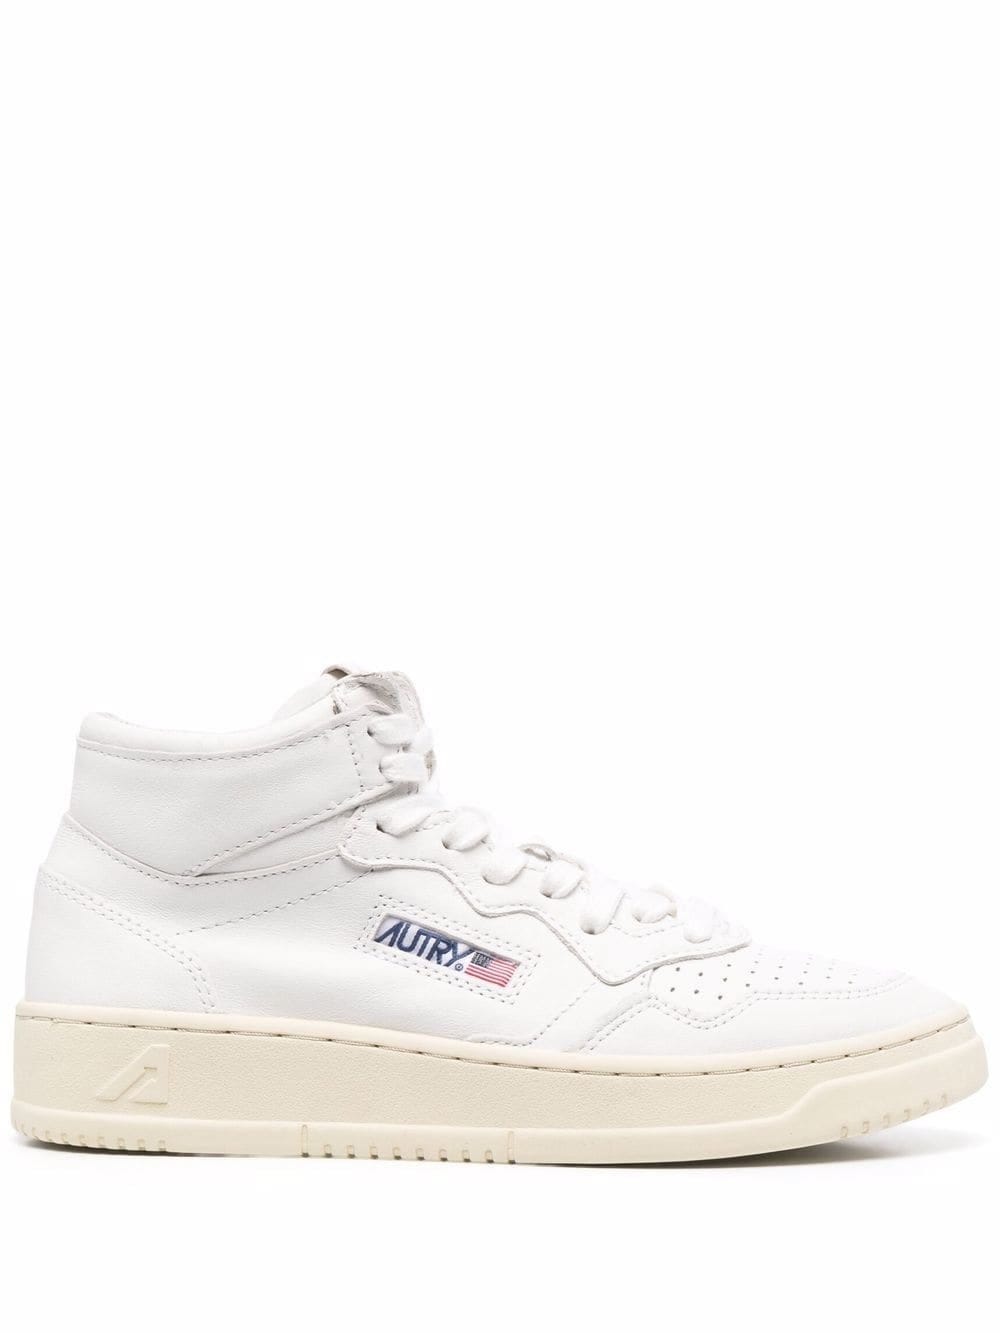 Autry Shoes White High Top Sneaker | ModeSens